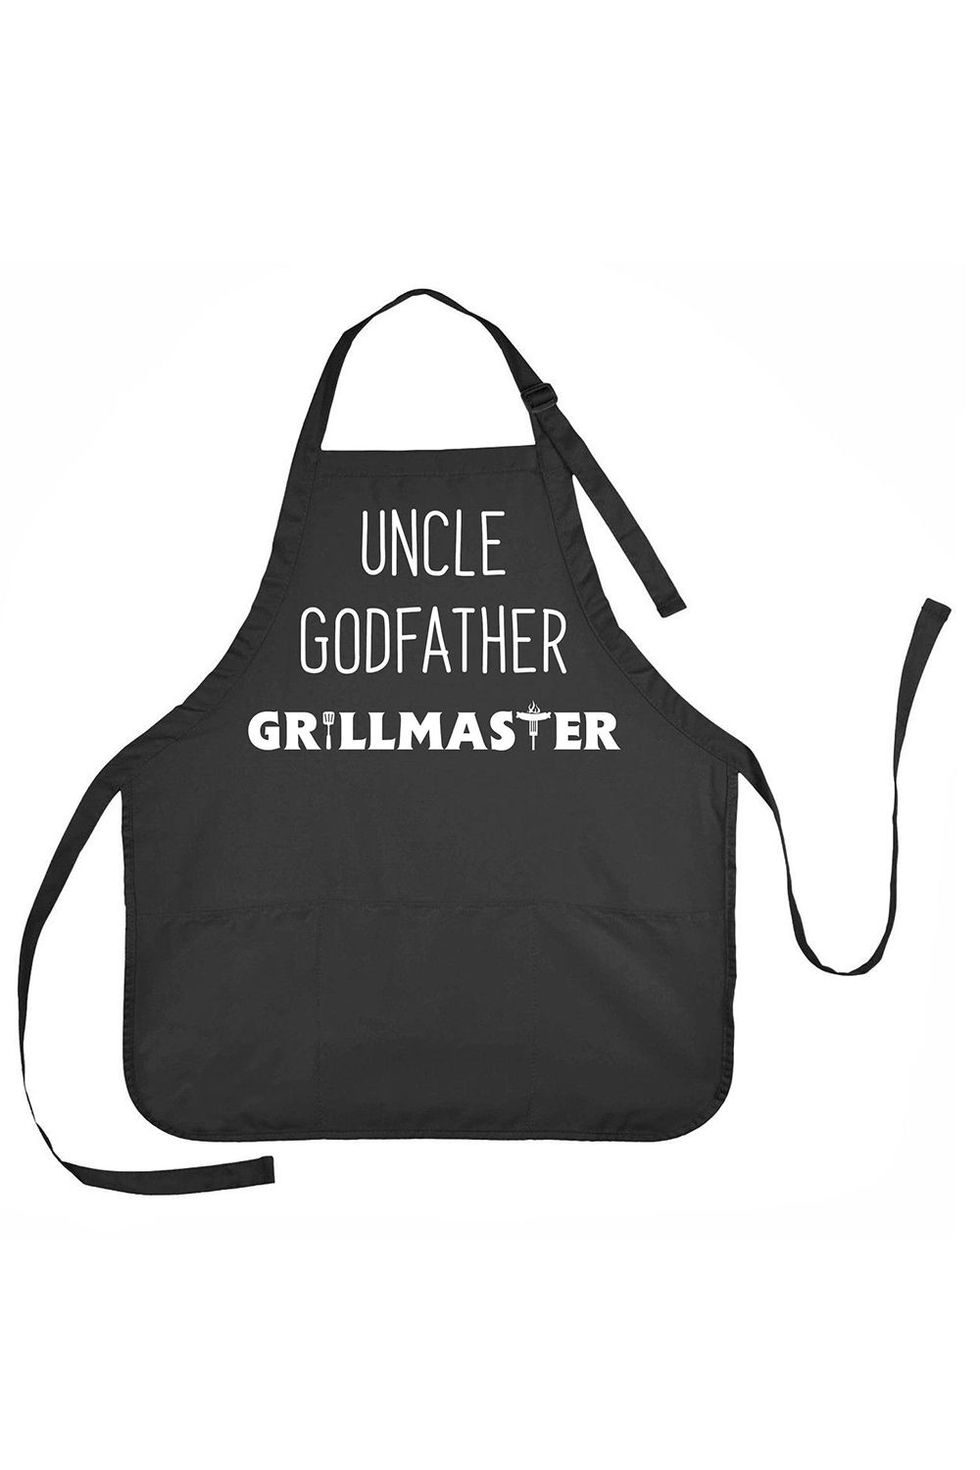 Grillmaster Apron Gift 